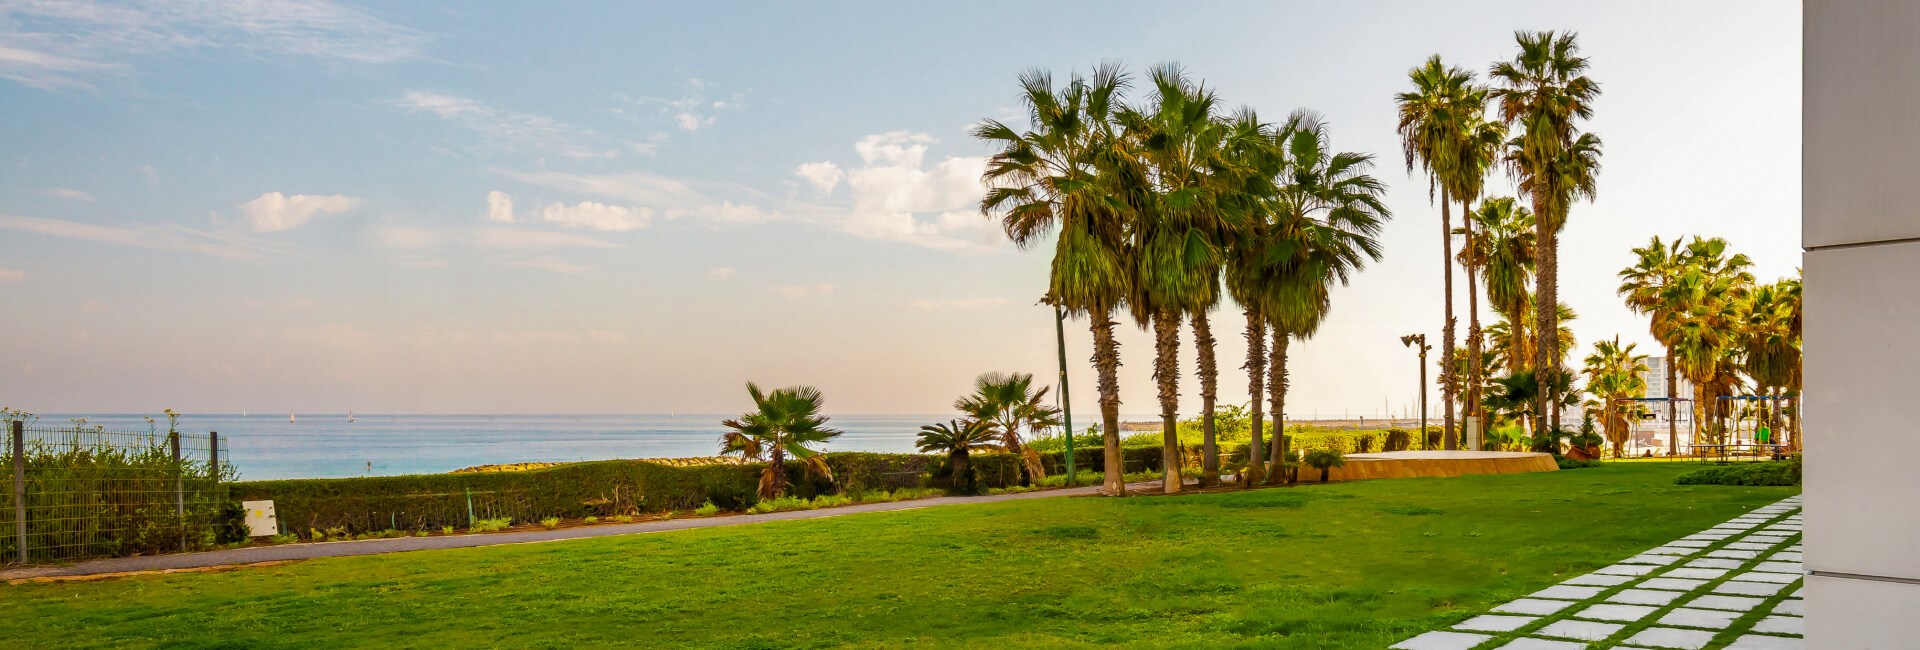 Daniel Herzliya hotel - the great garden